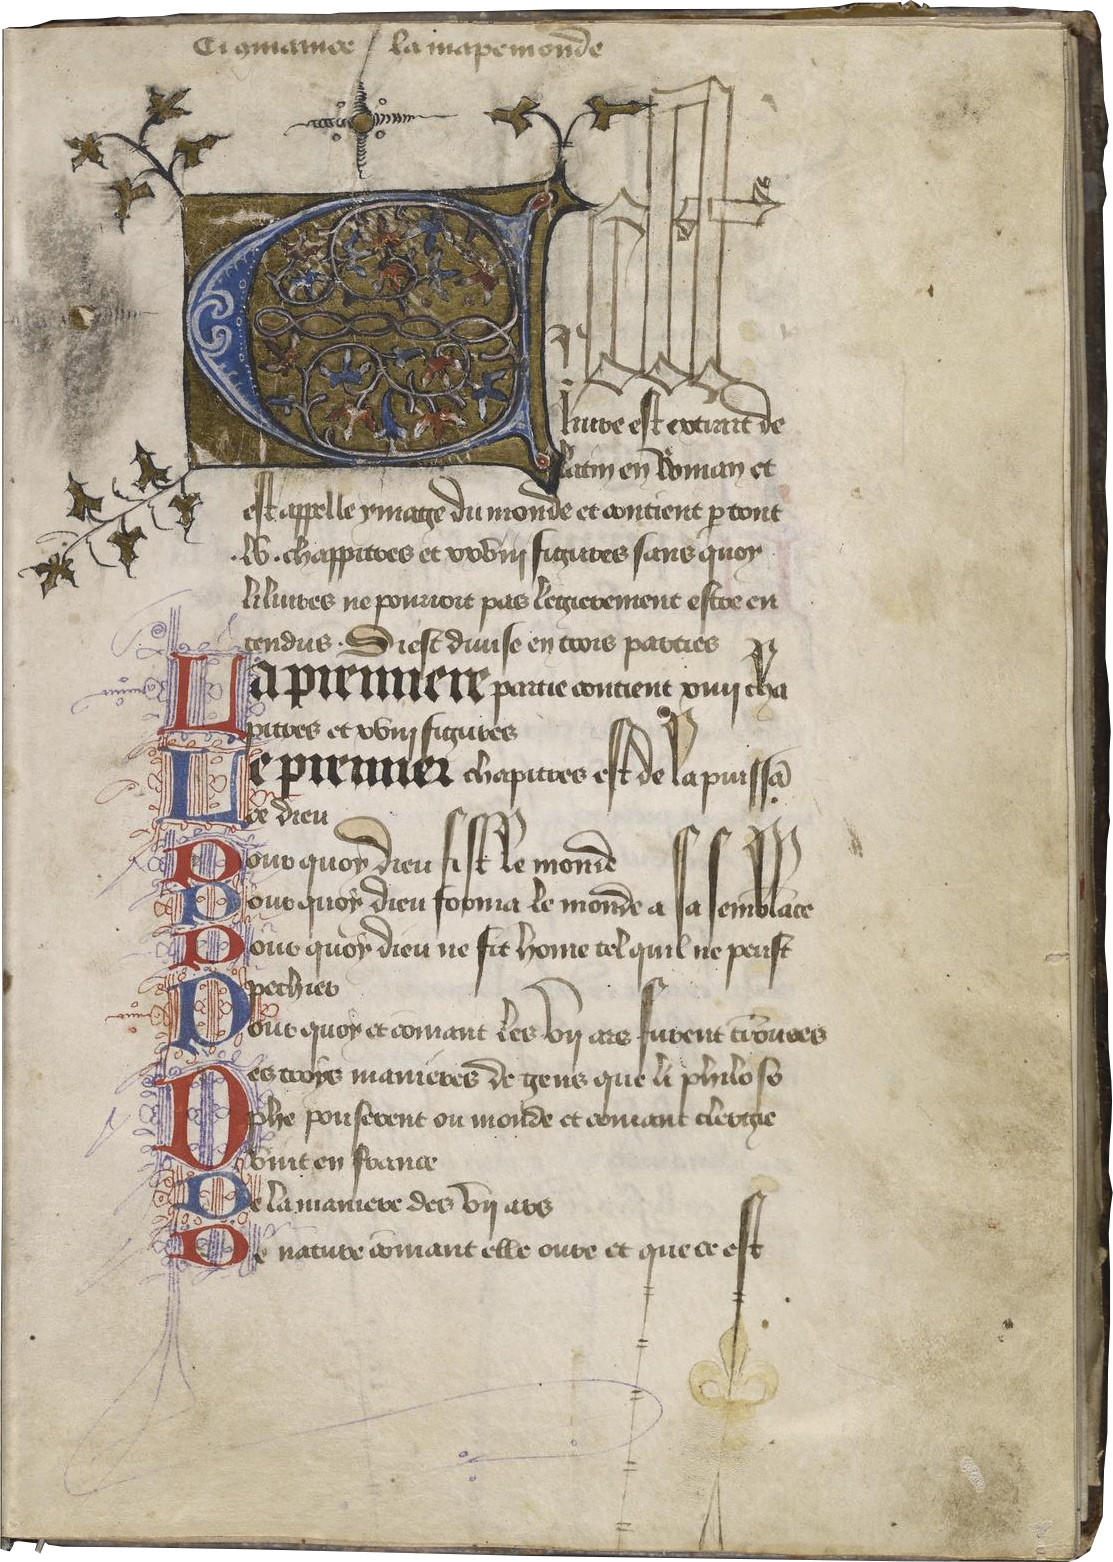 Ymage du monde, Fol. 2r, manuscript copy, ca. 1400